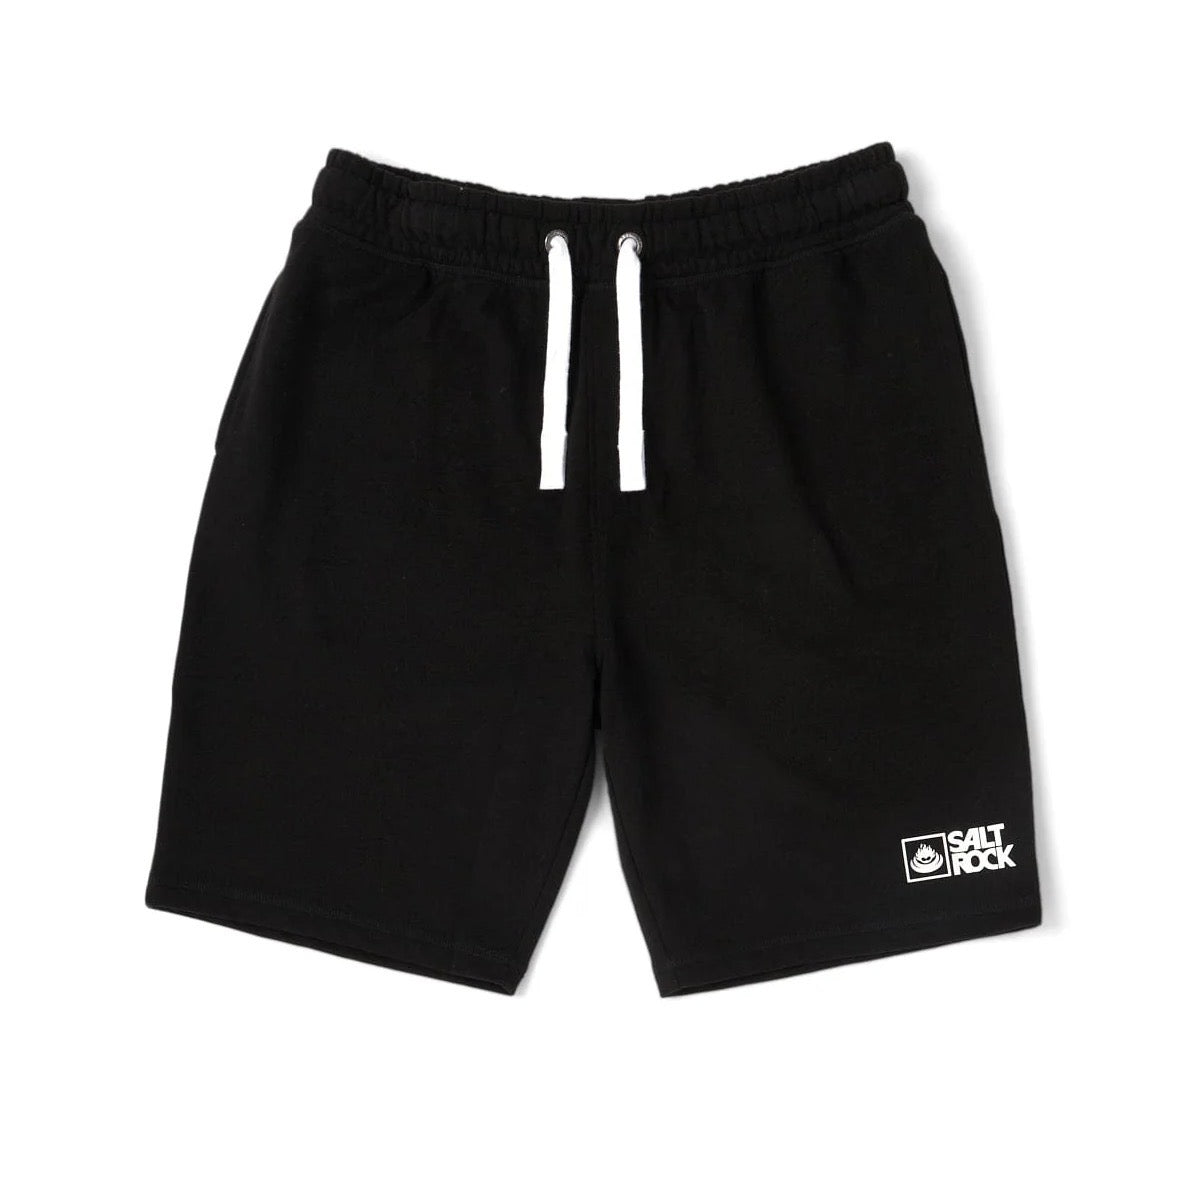 Saltrock Mens Original Jersey Shorts Black